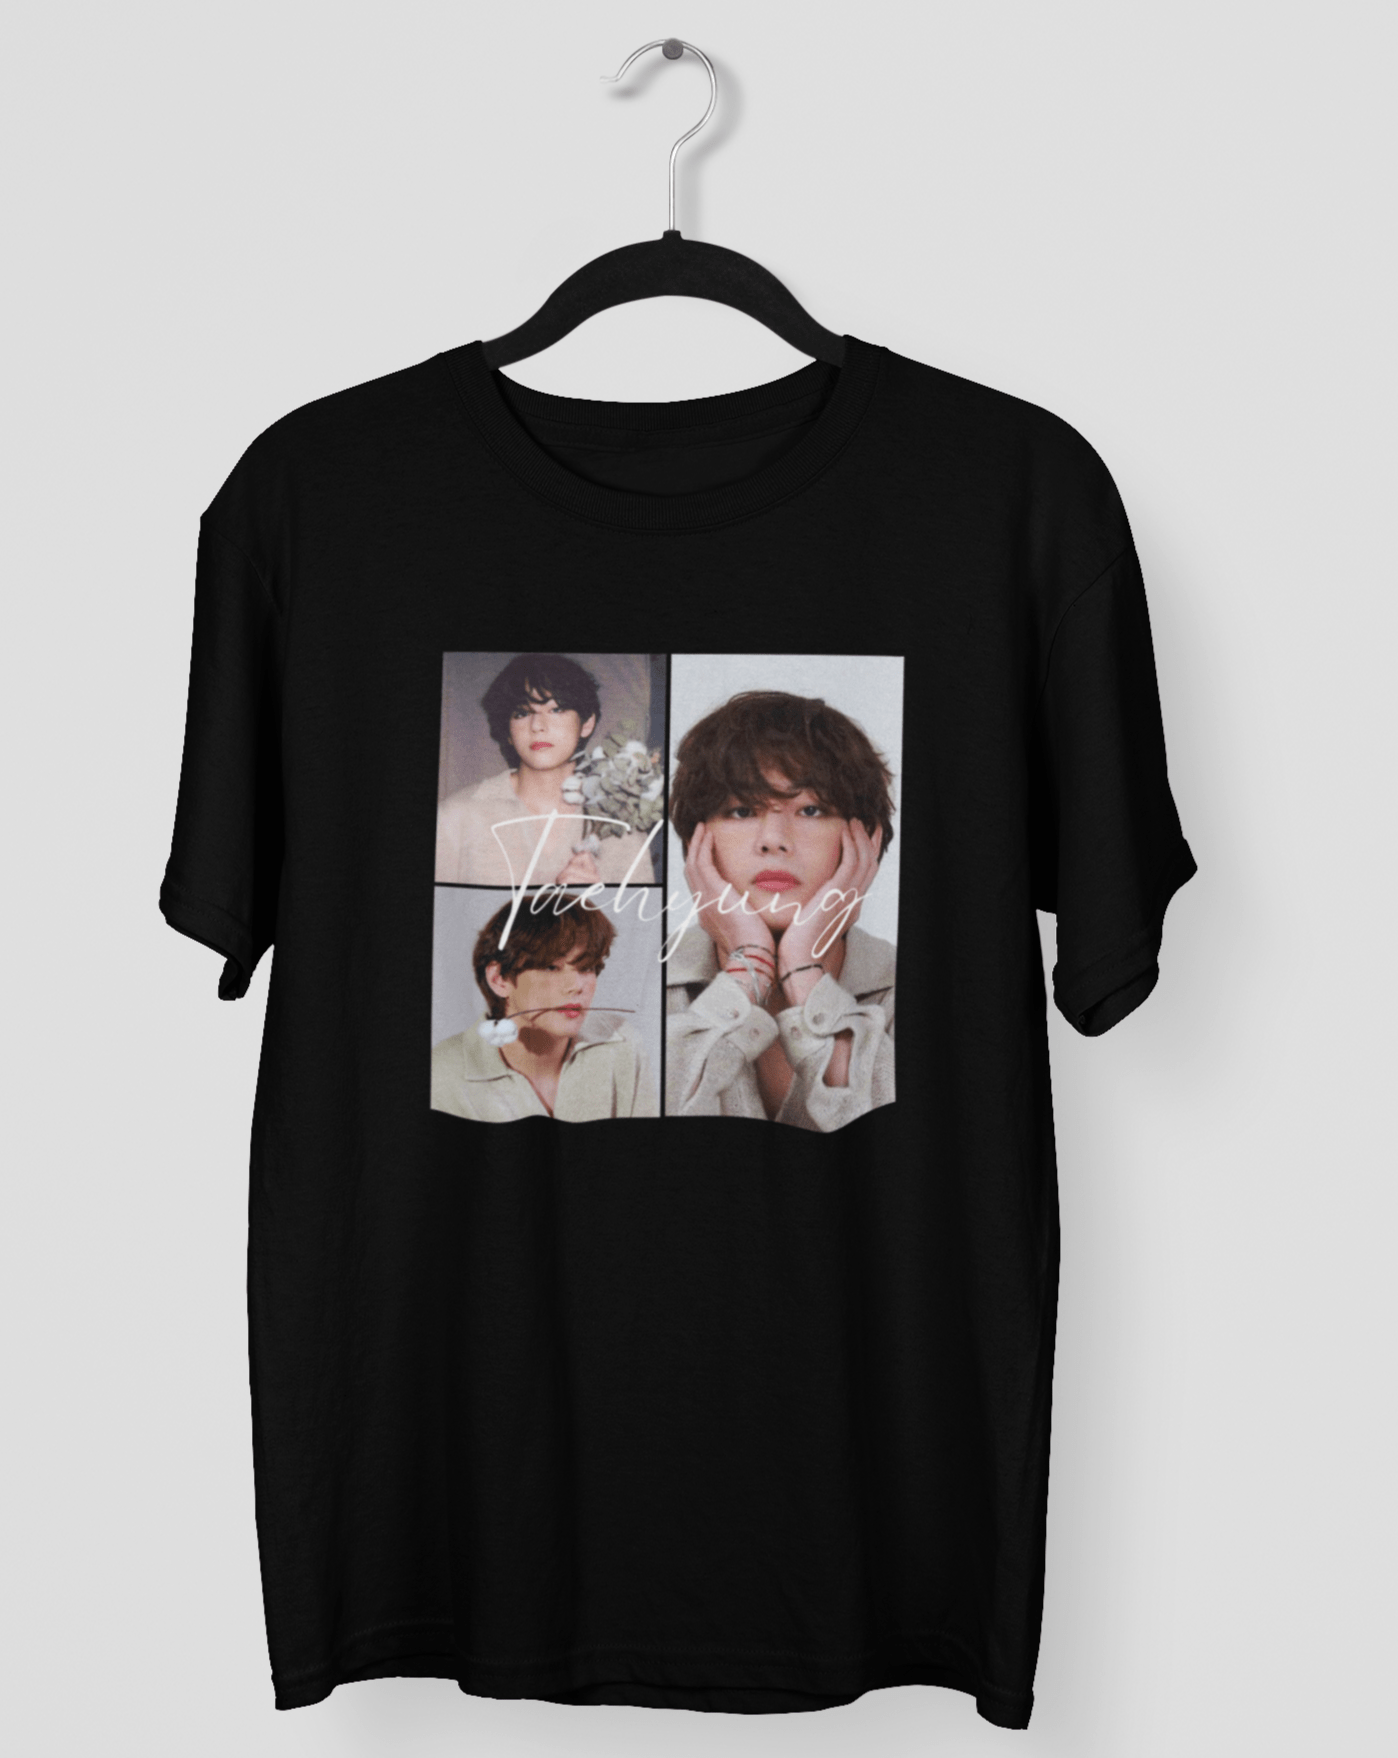 Vibin' with Taehyung T-shirt